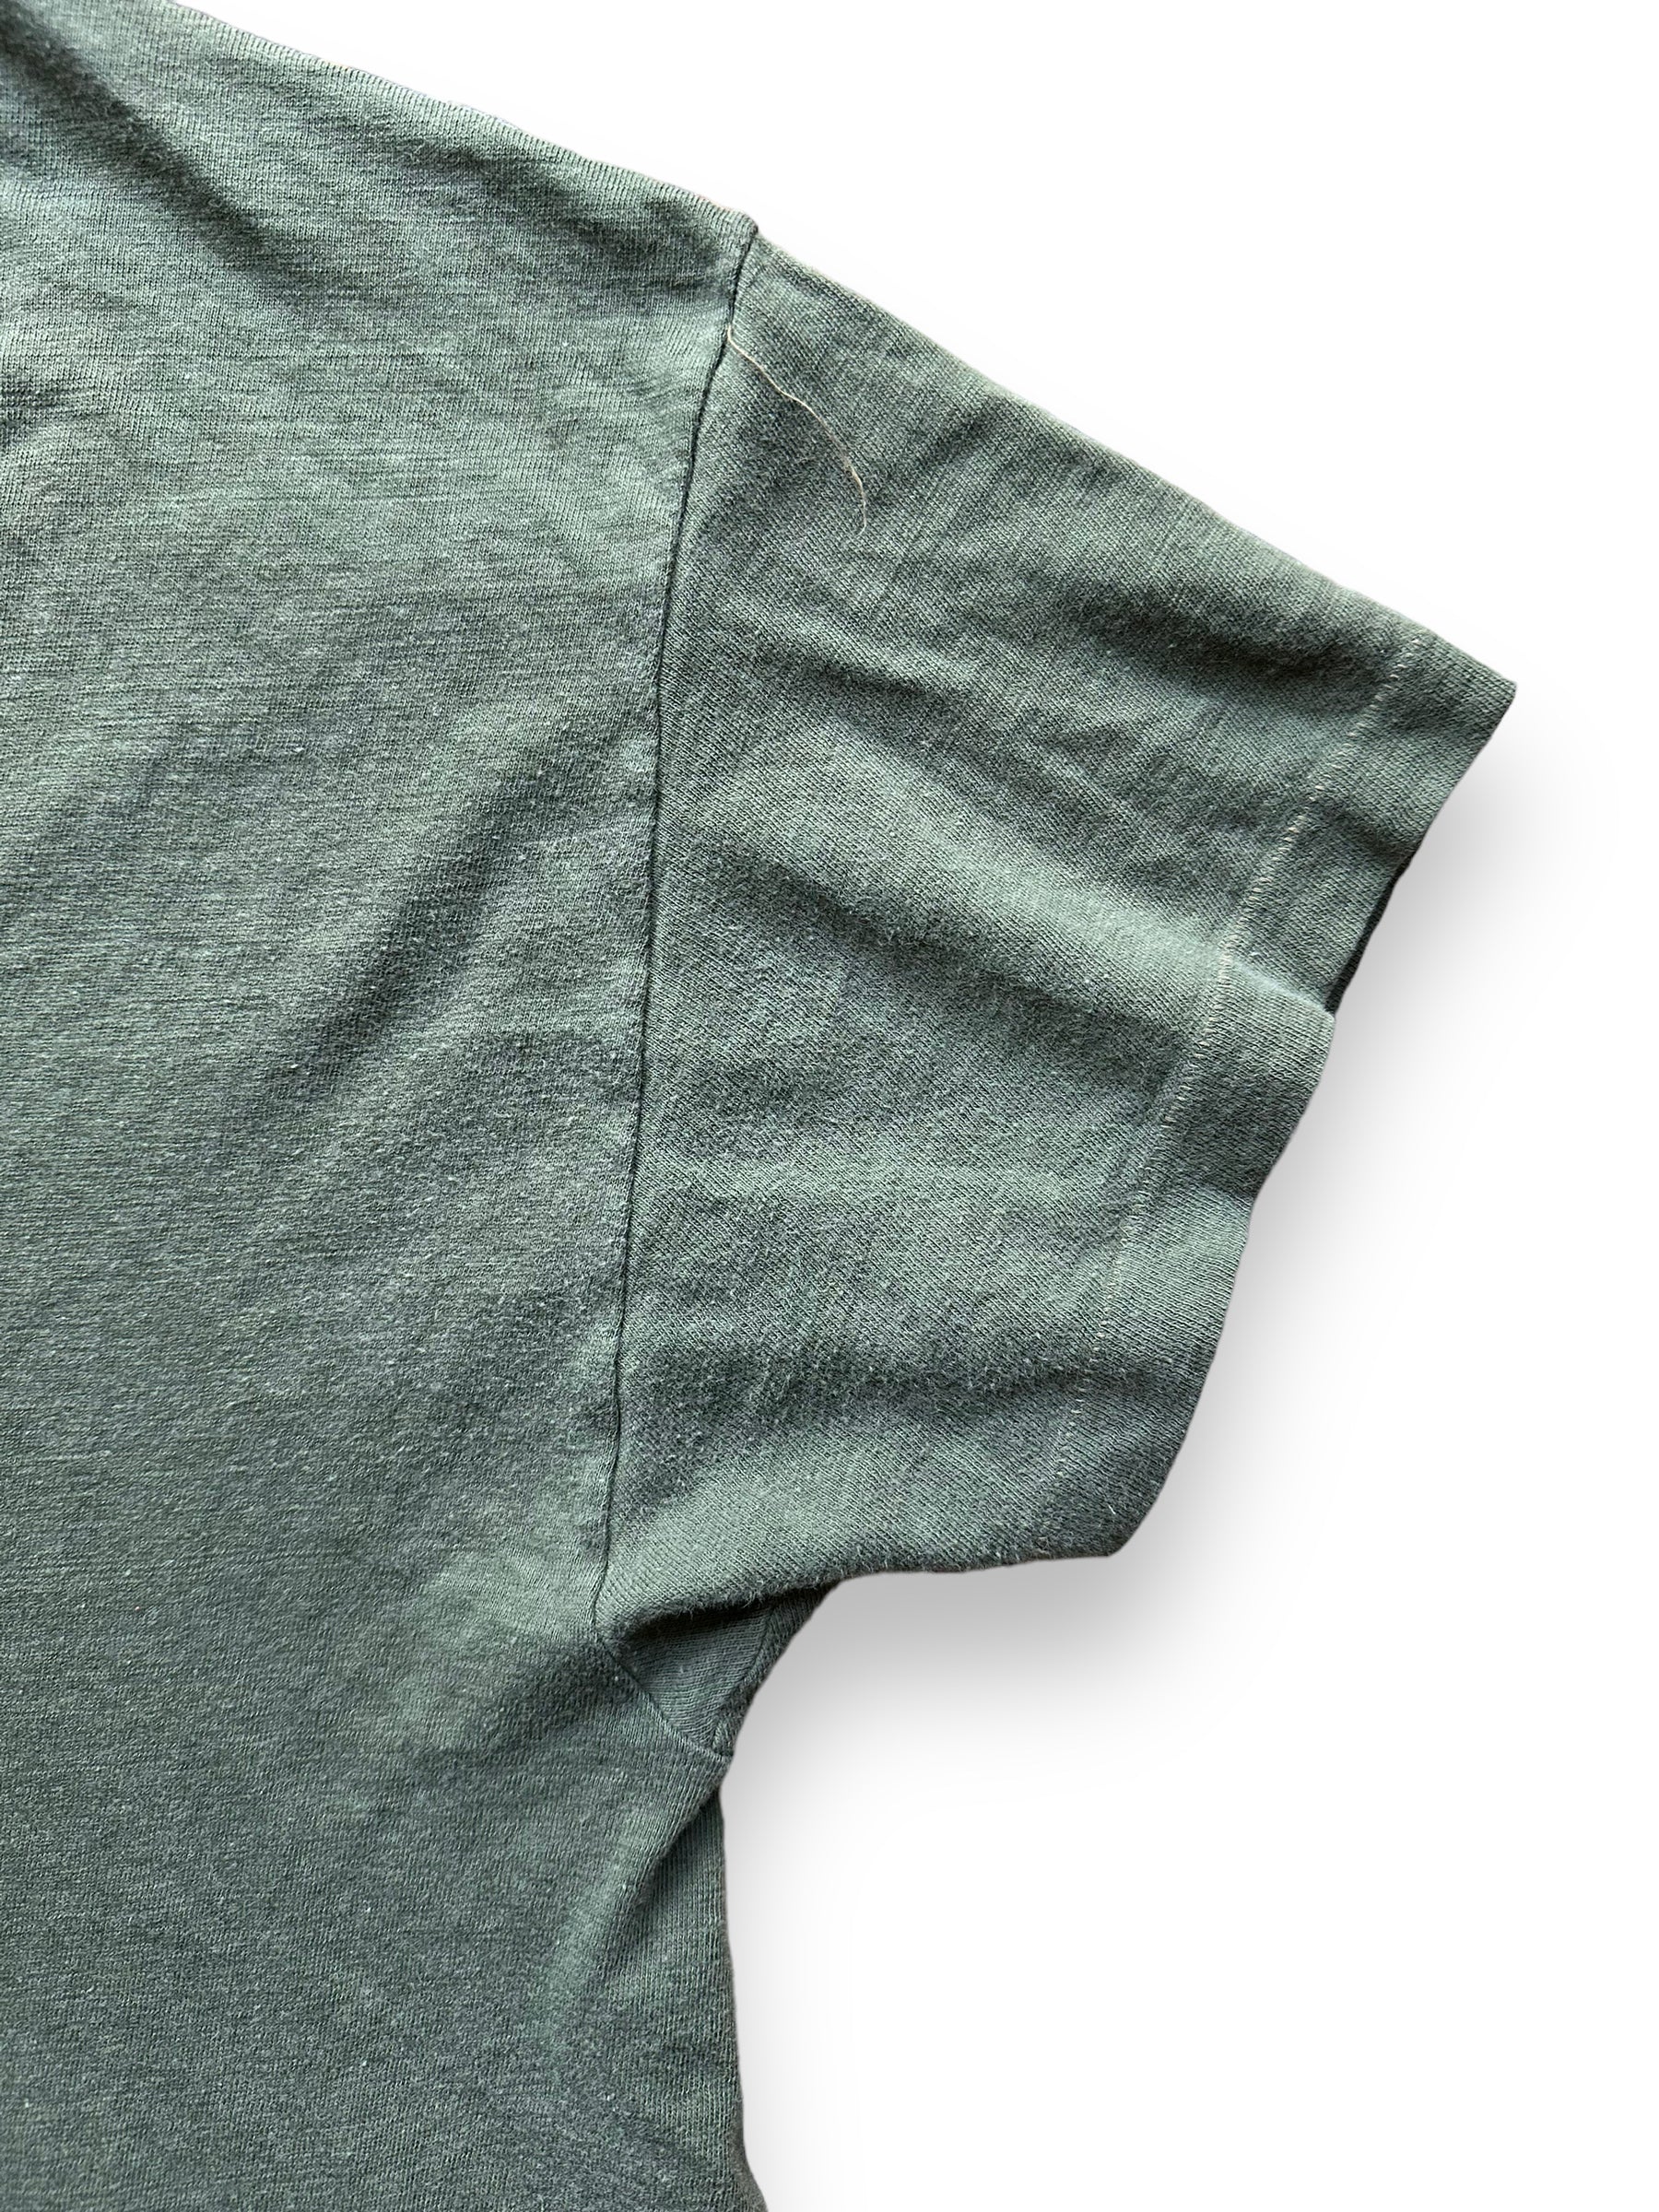 Left Sleeve of Vintage Green Hanes Blank Tee SZ XL | Vintage Blank T-Shirts Seattle | Barn Owl Vintage Tees Seattle